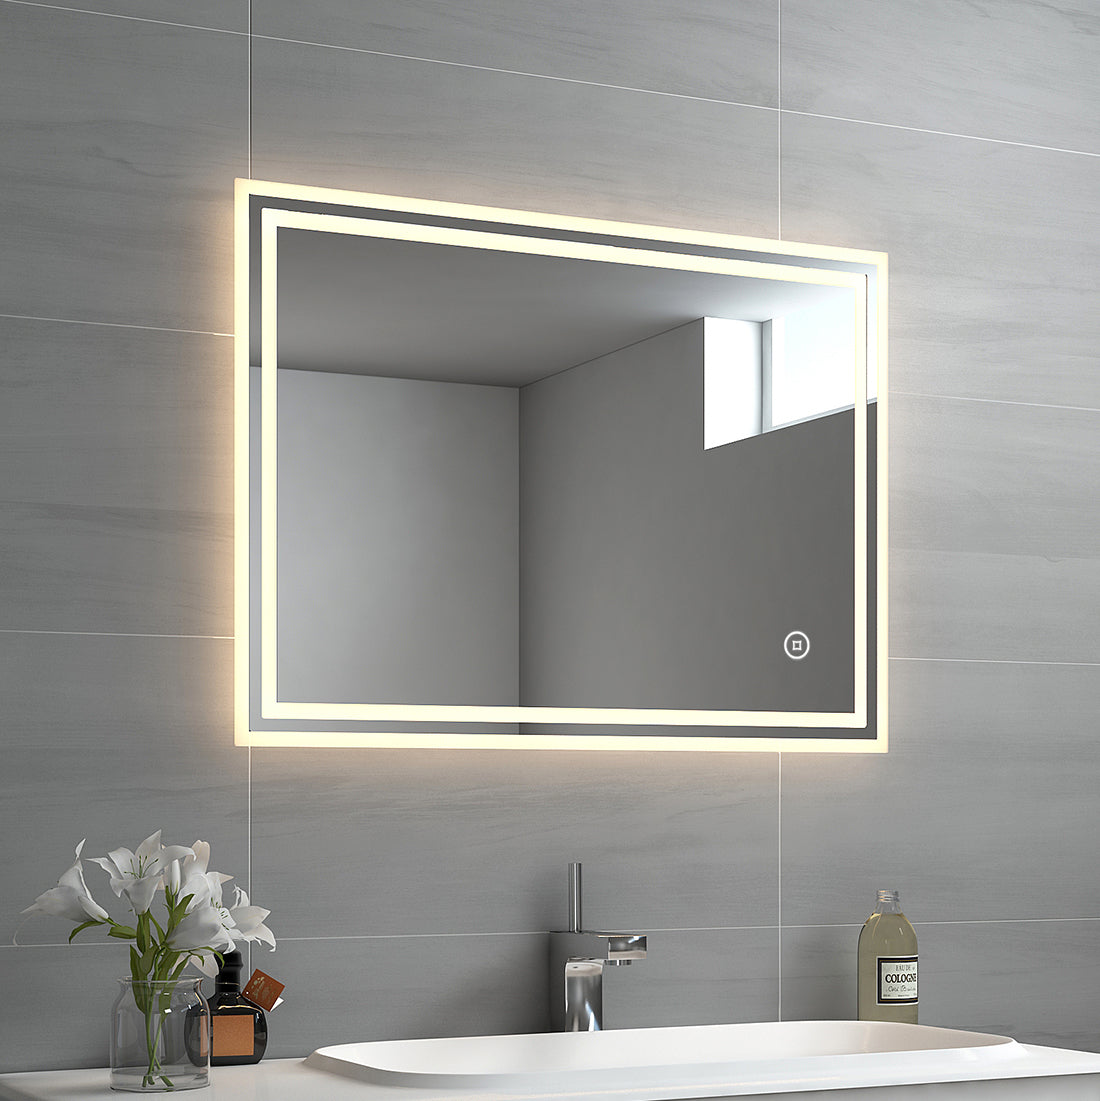 EMKE Badspiegel LED 60 x 80 cm – Touch – Dimmbar – 3 Lichtfarben – Antibeschlag – IP44